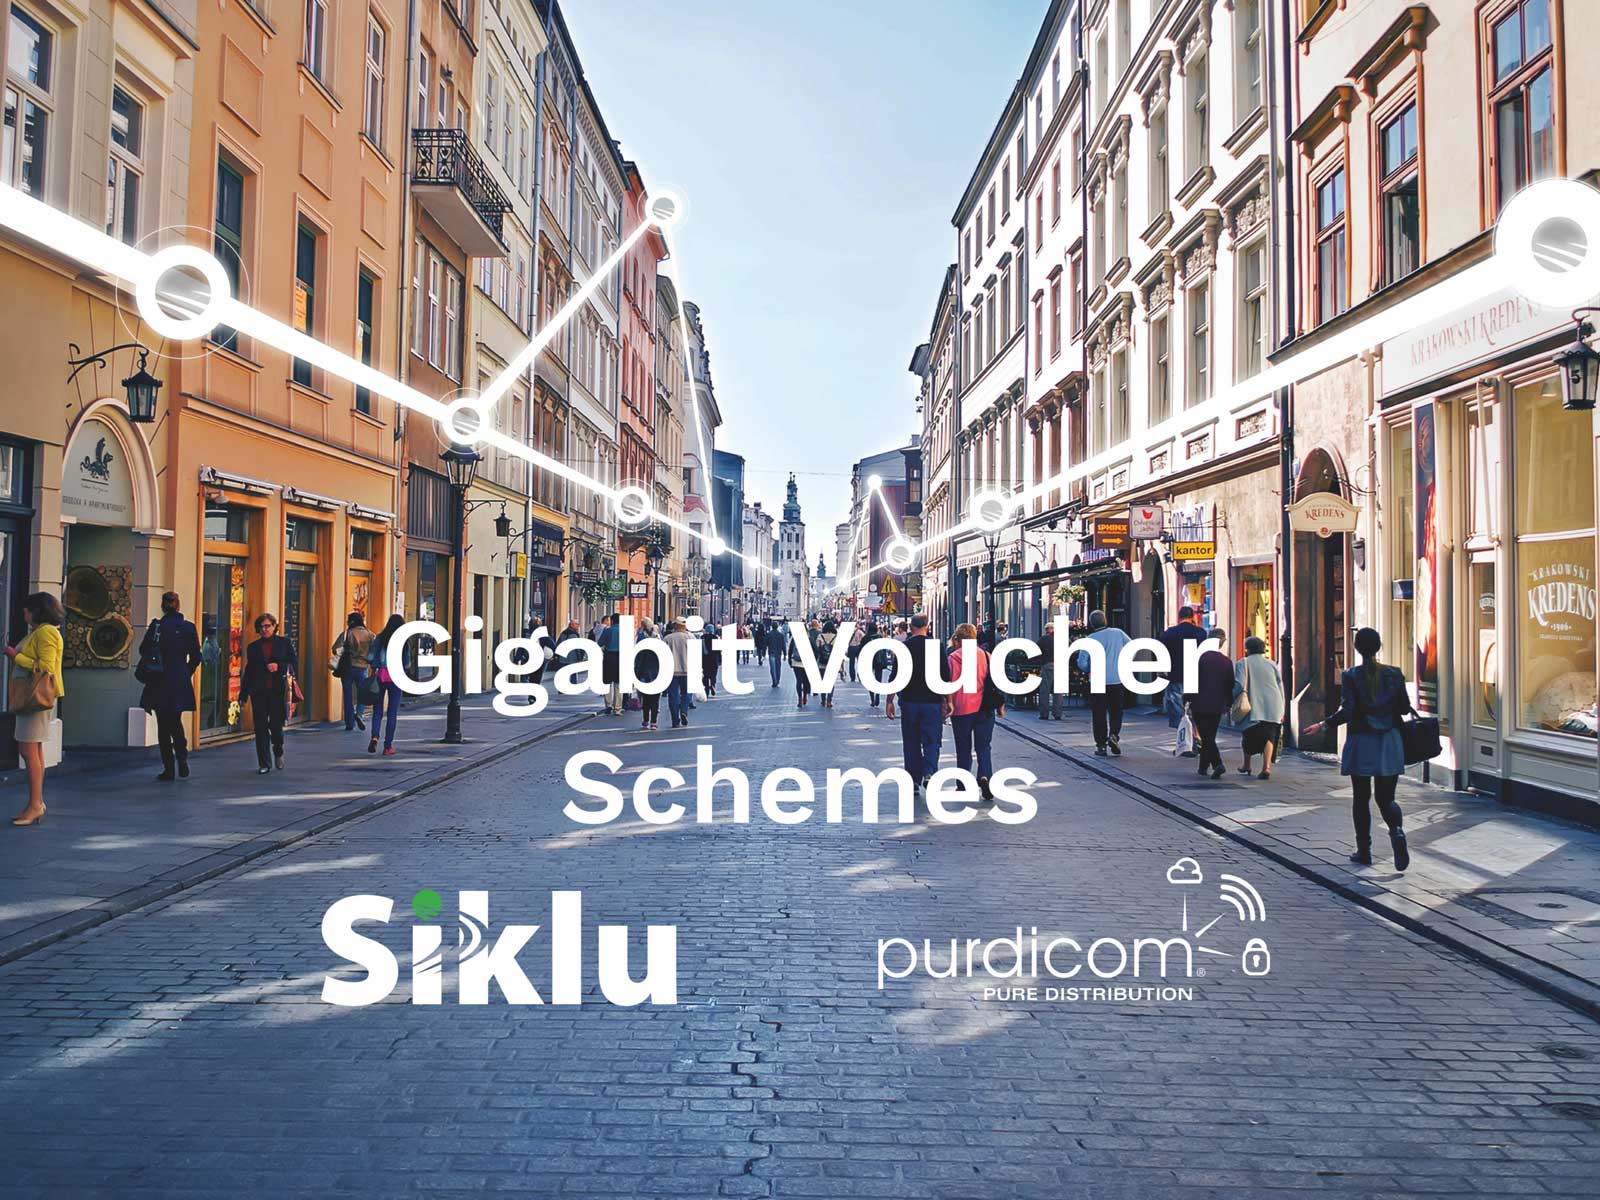 Siklu - Make the most of the Gigabit Voucher Schemes